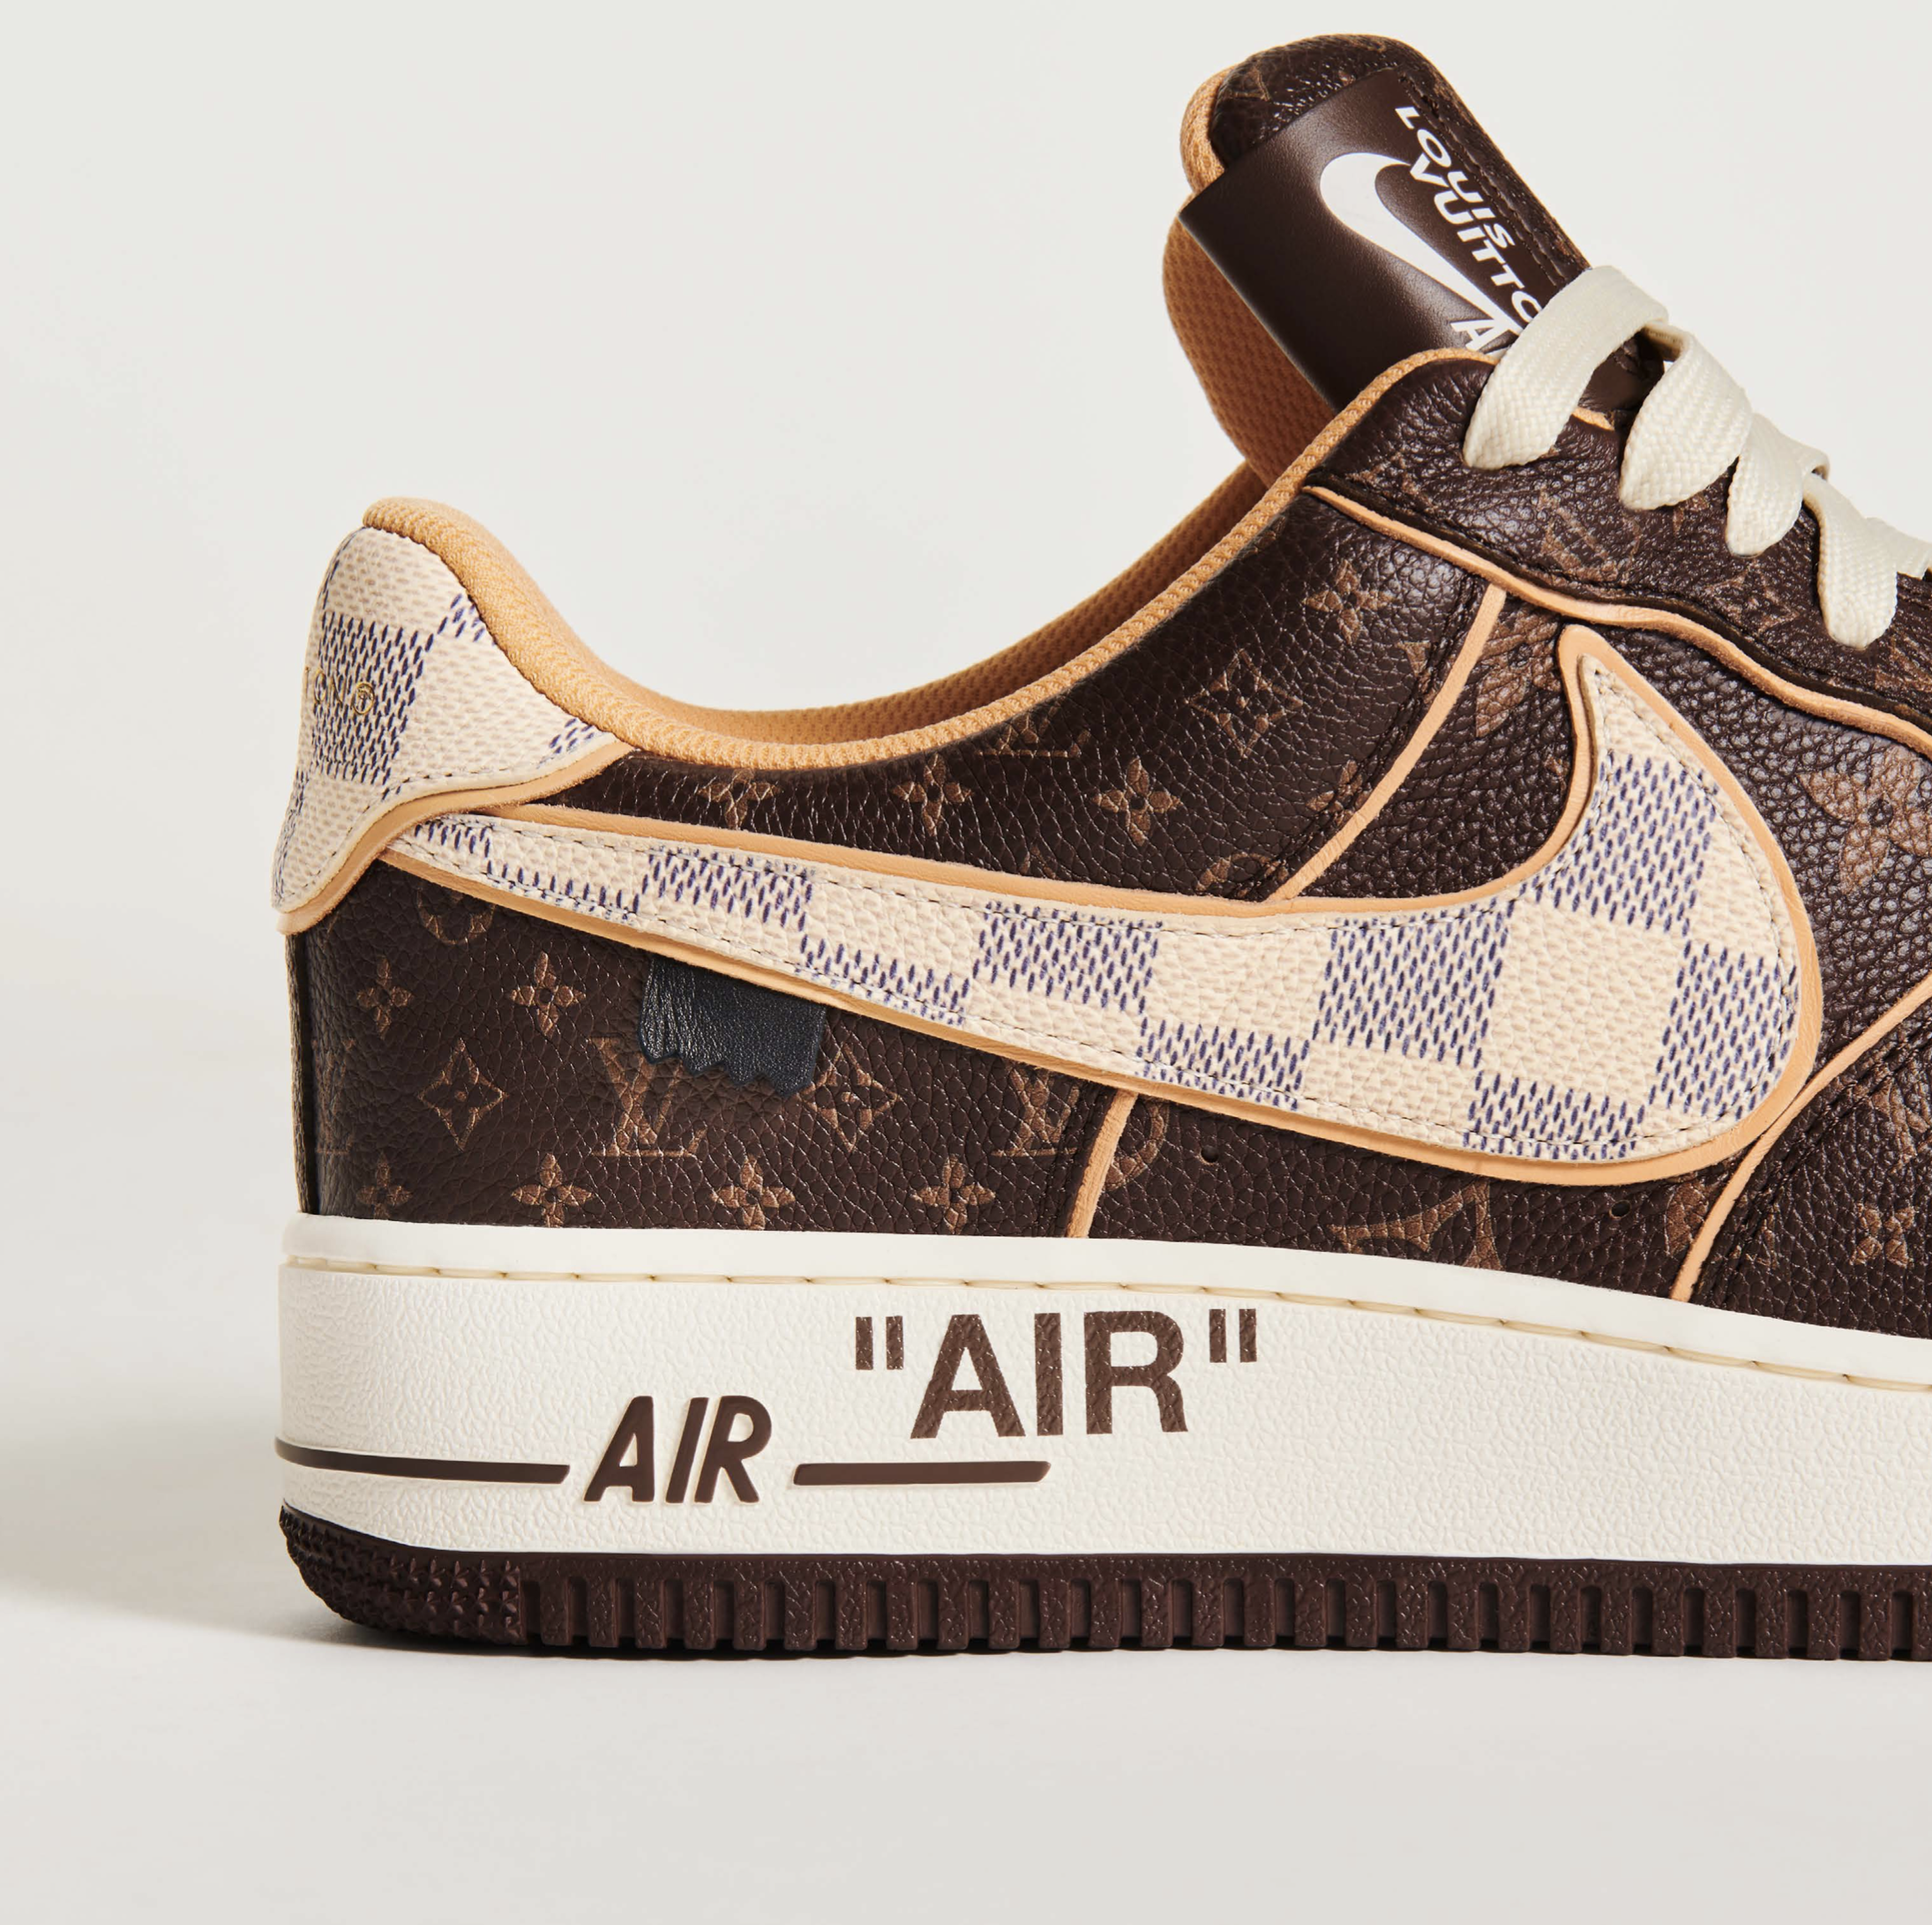 Reseller Accidentally Shares Bulk Louis Vuitton x Nike Air Force 1 Purchase  Receipt - Sneaker News